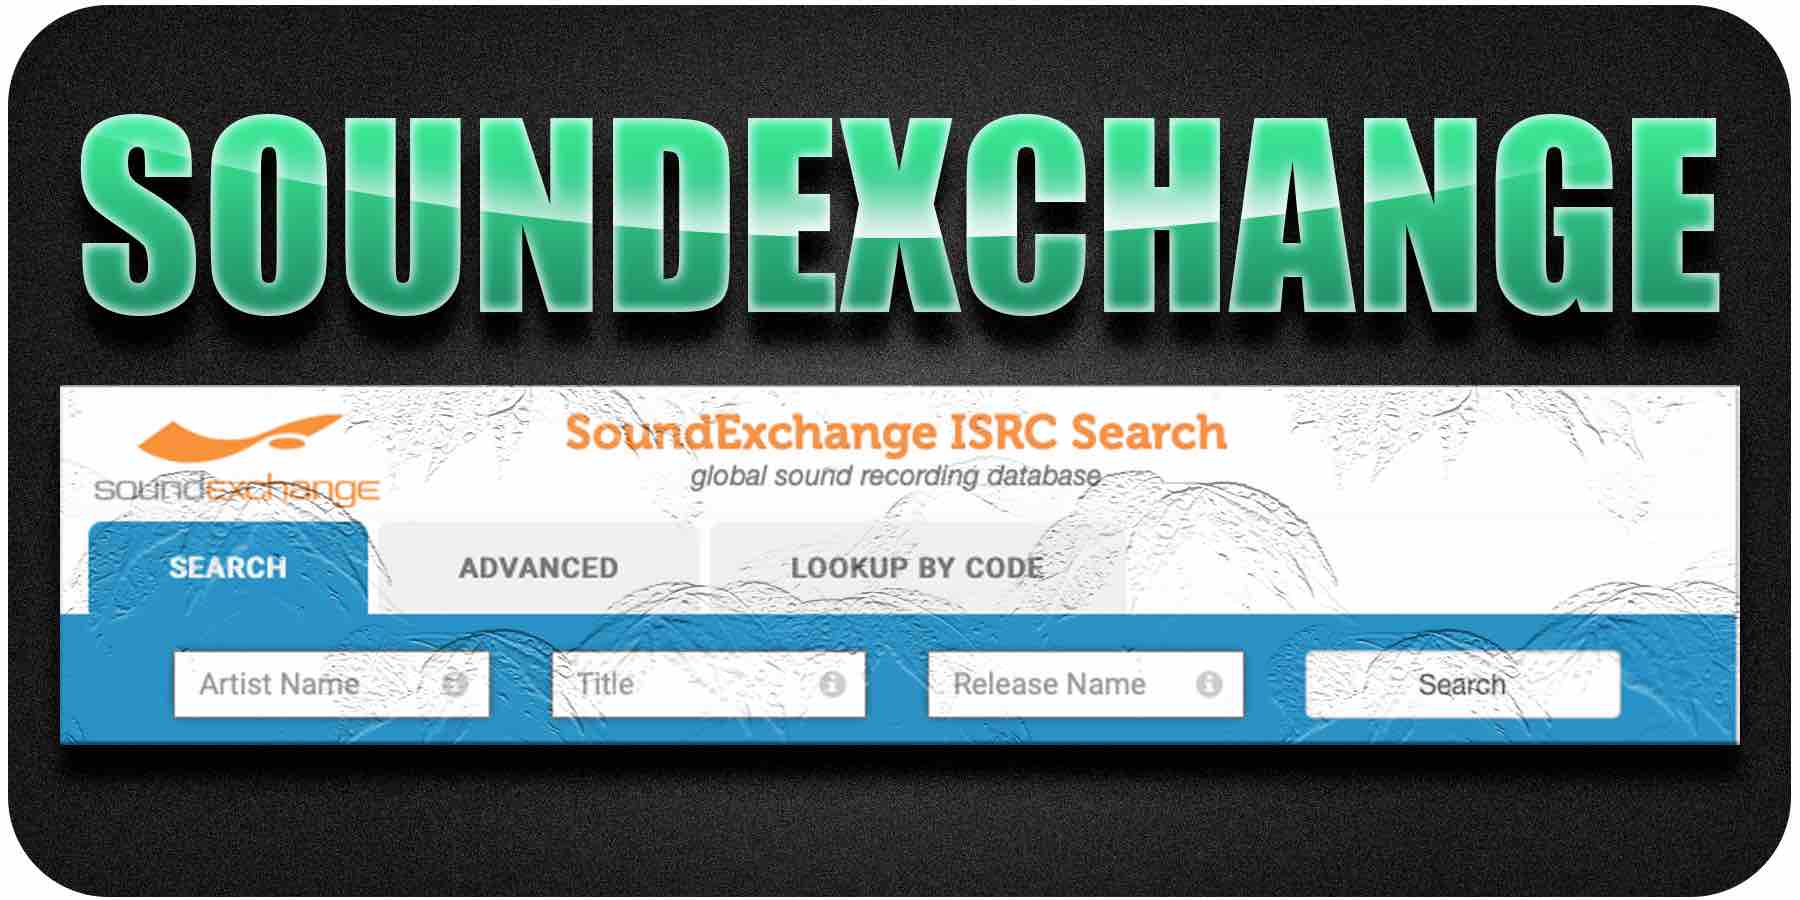 SoundExchange ISRC Search Tool